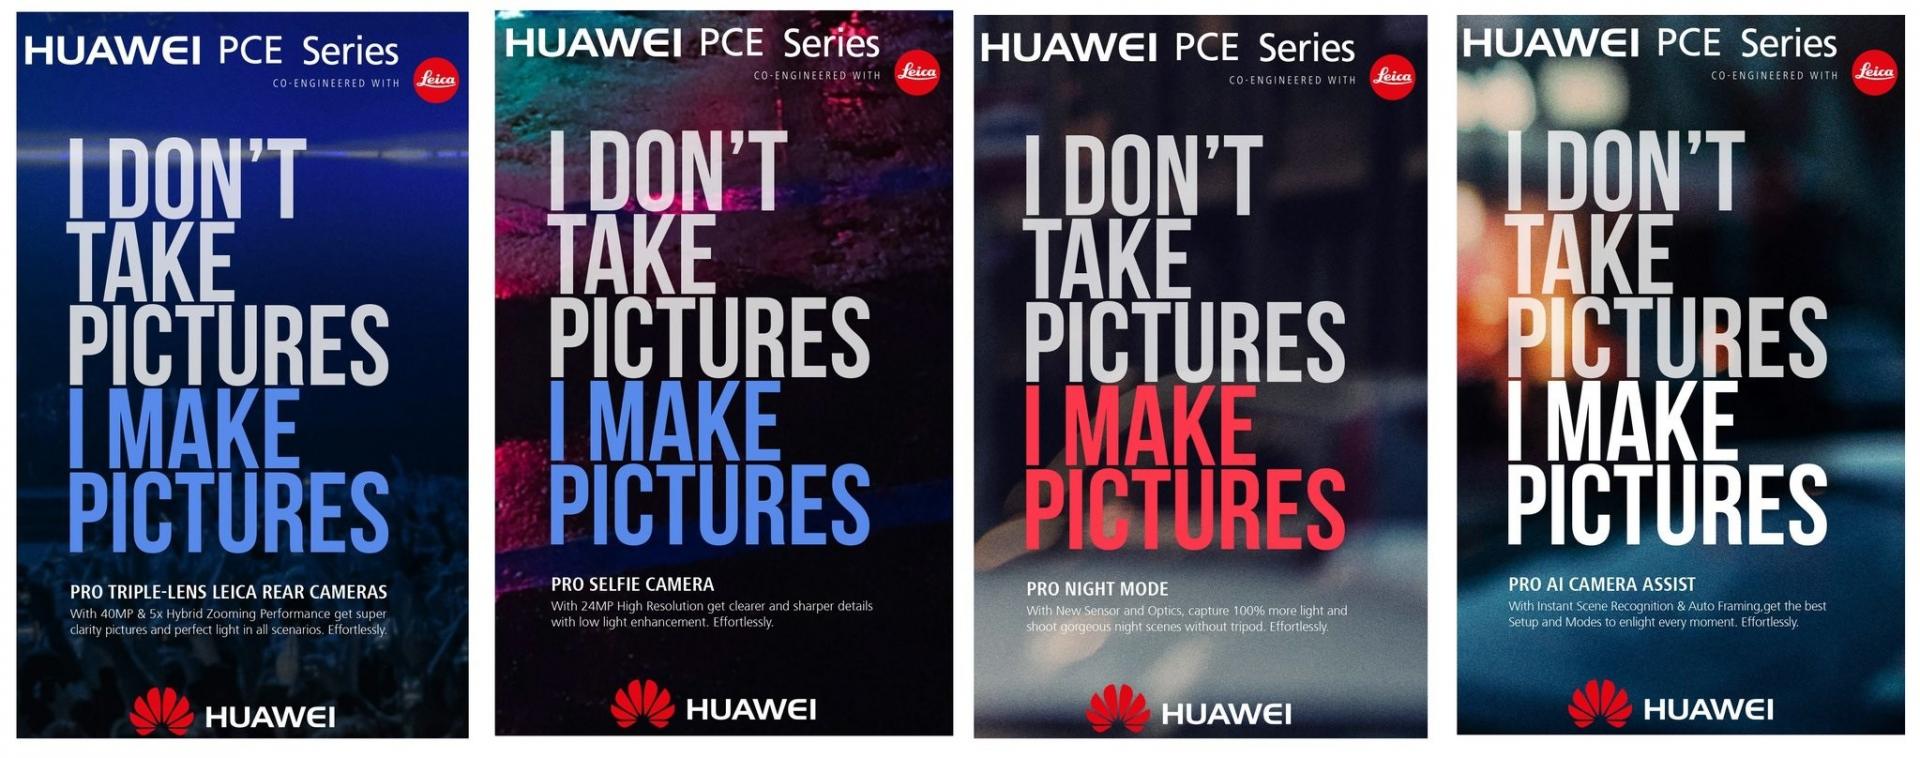 huawei pce series